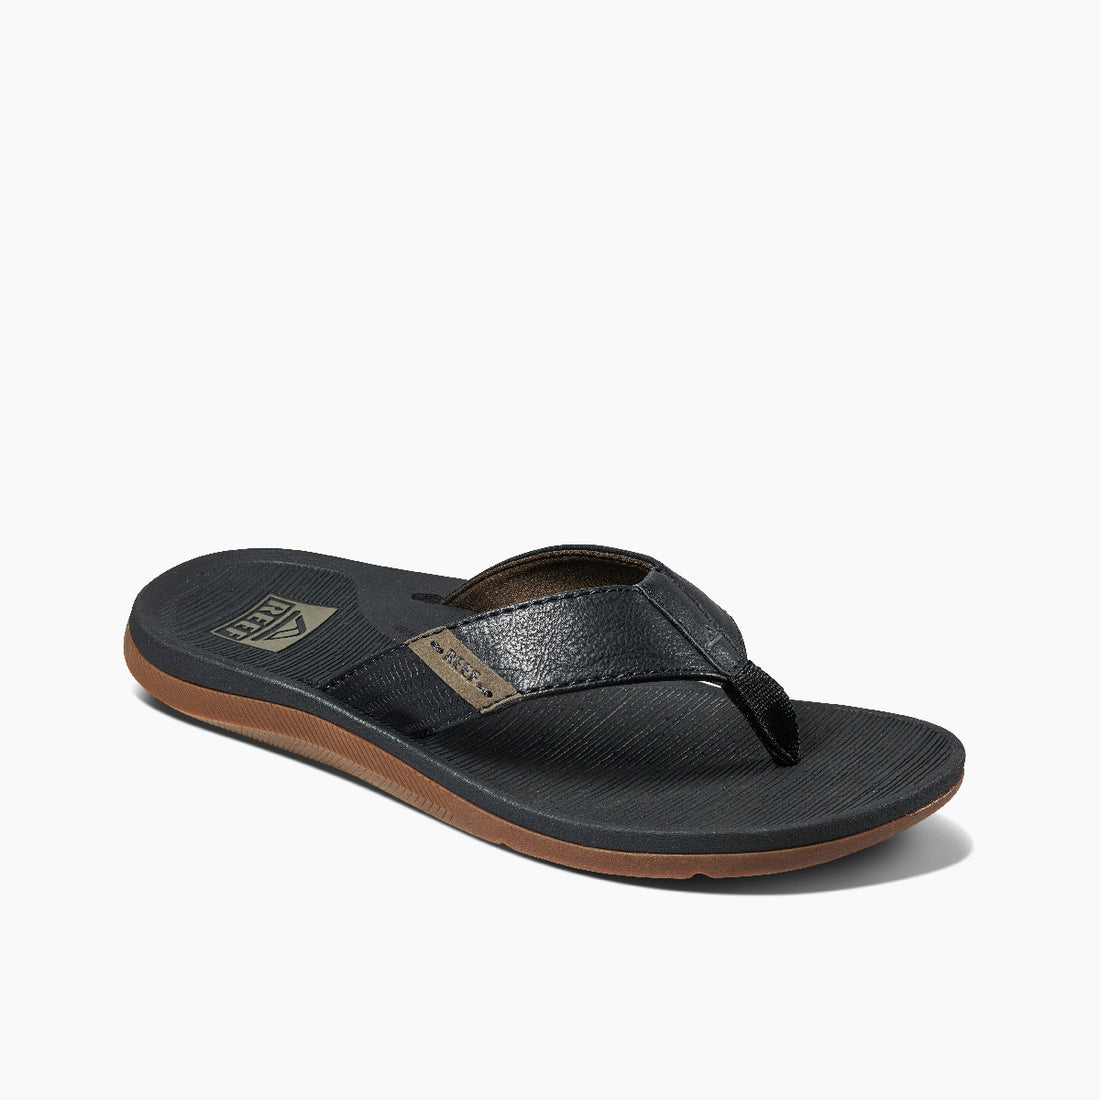 REEF Men's Santa Ana Flip Flop Sandals Black - CI4650 BLACK - BLACK, 8